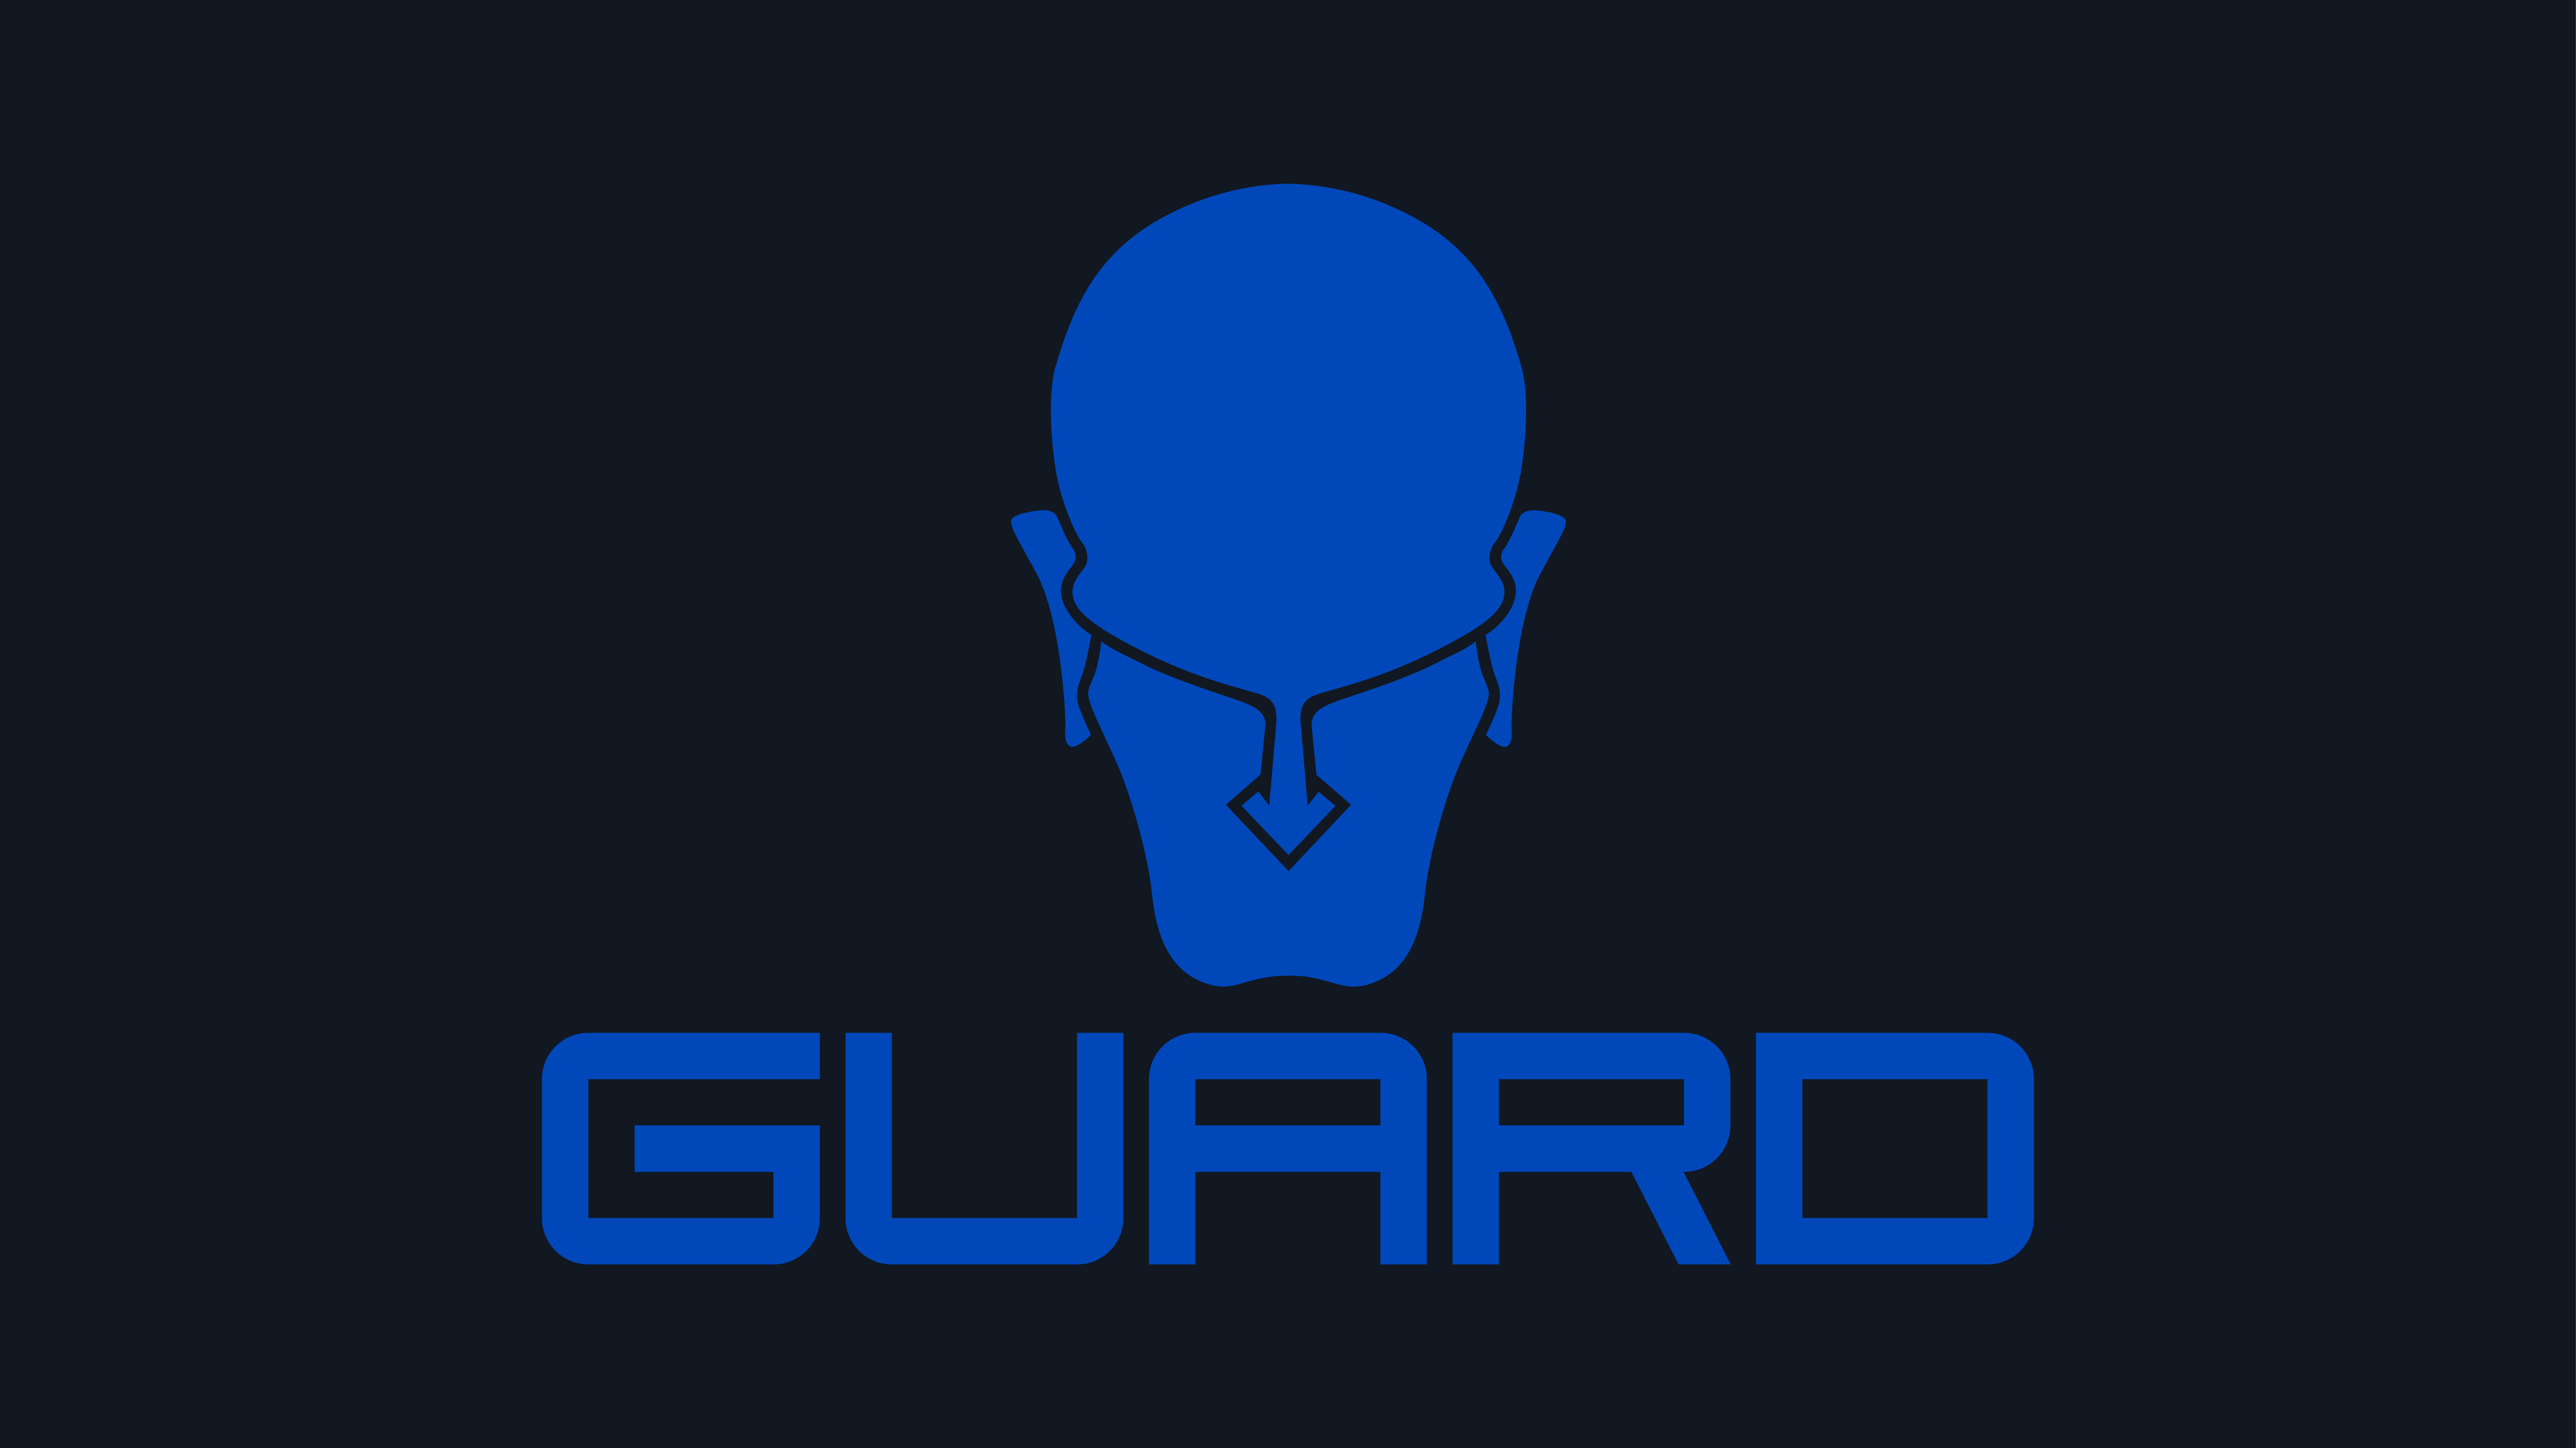 Guard wordmark logo